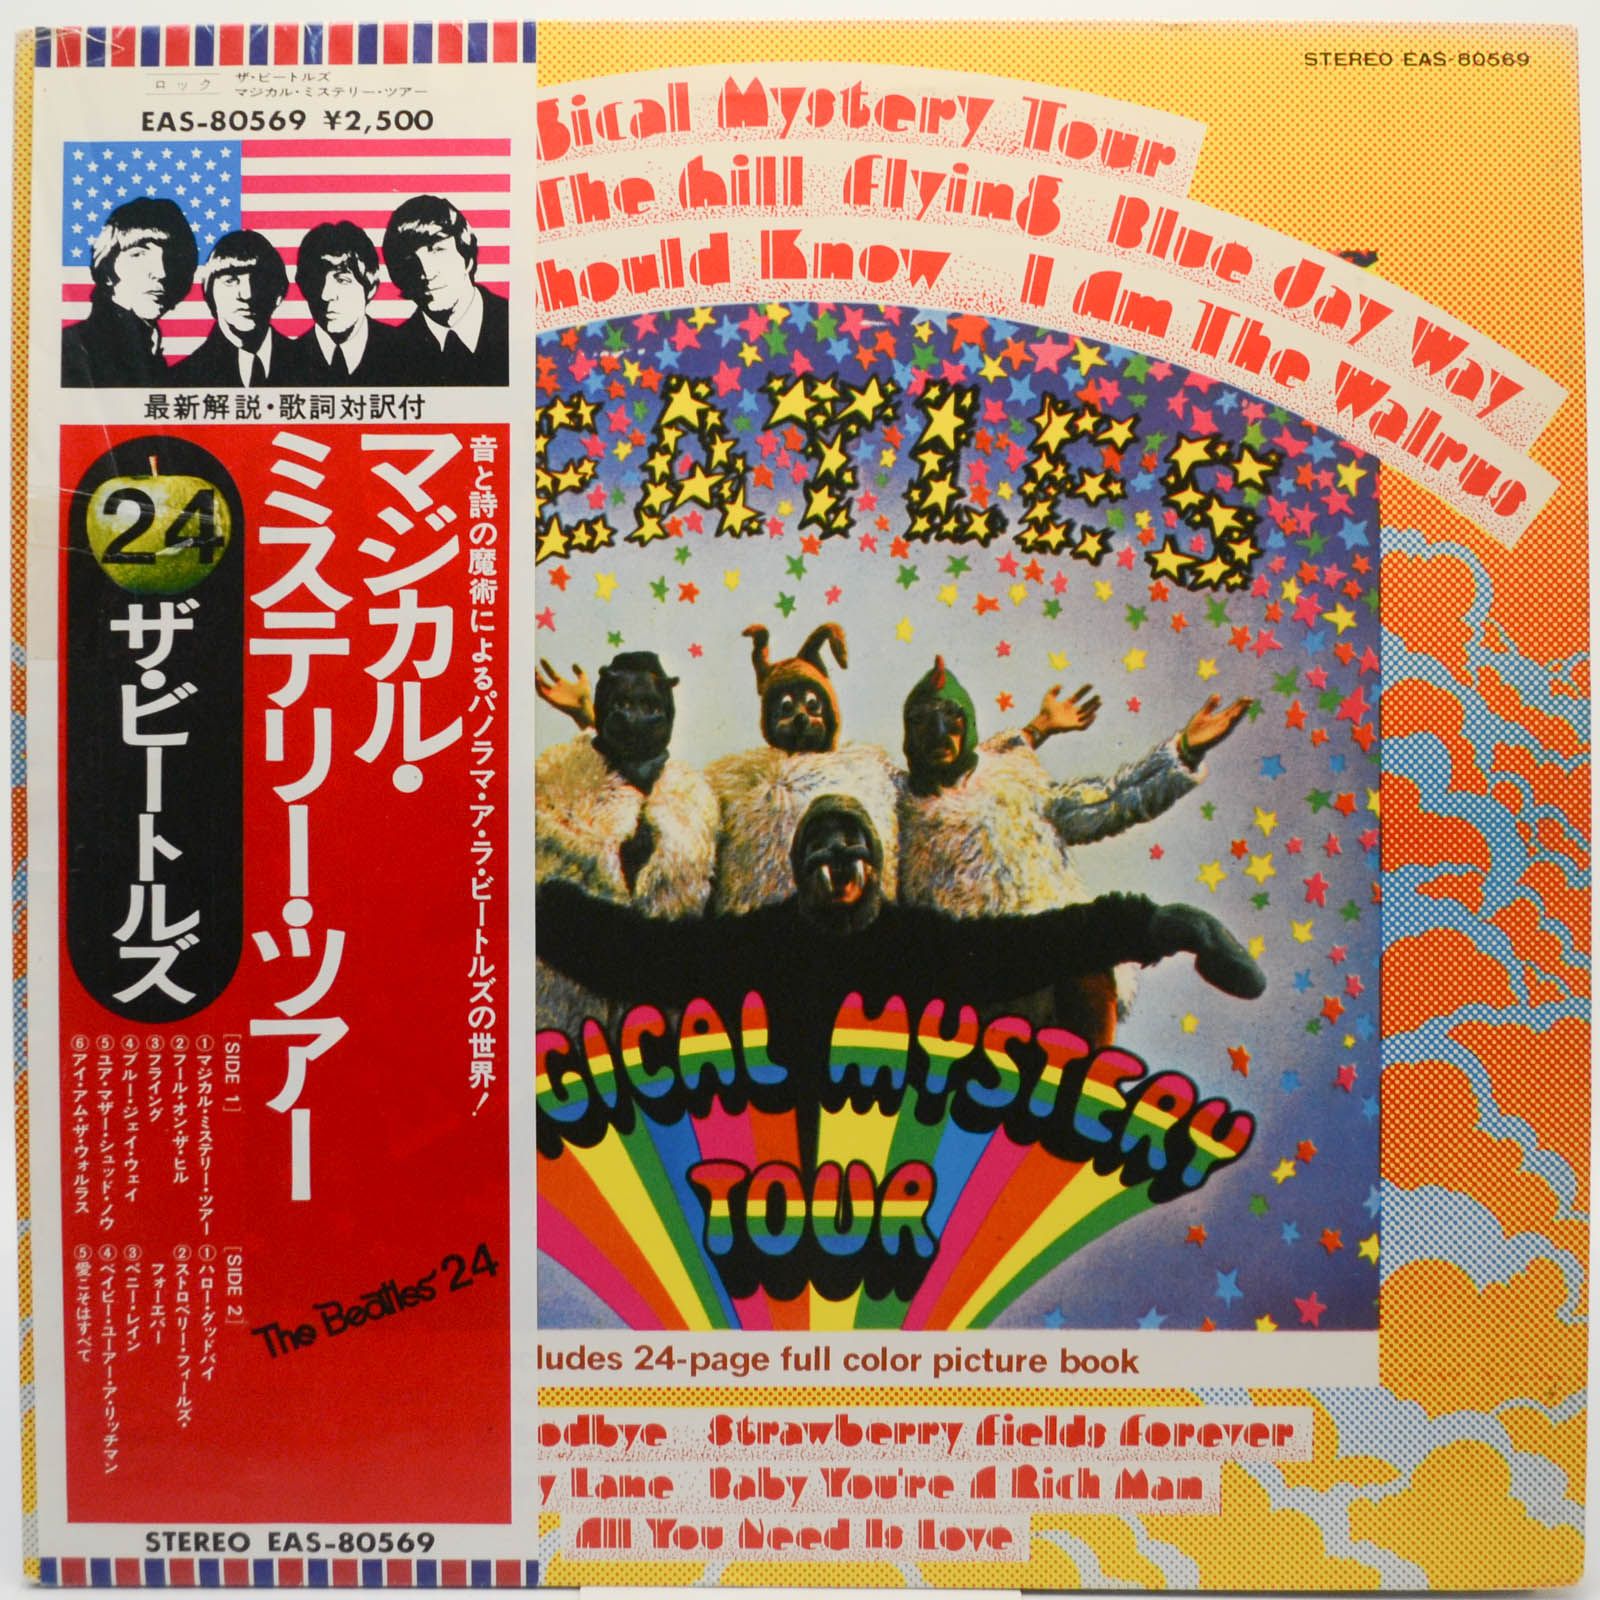 Beatles = ザ・ビートルズ — Magical Mystery Tour = マジカル・ミステリー・ツアー (booklet), 1967